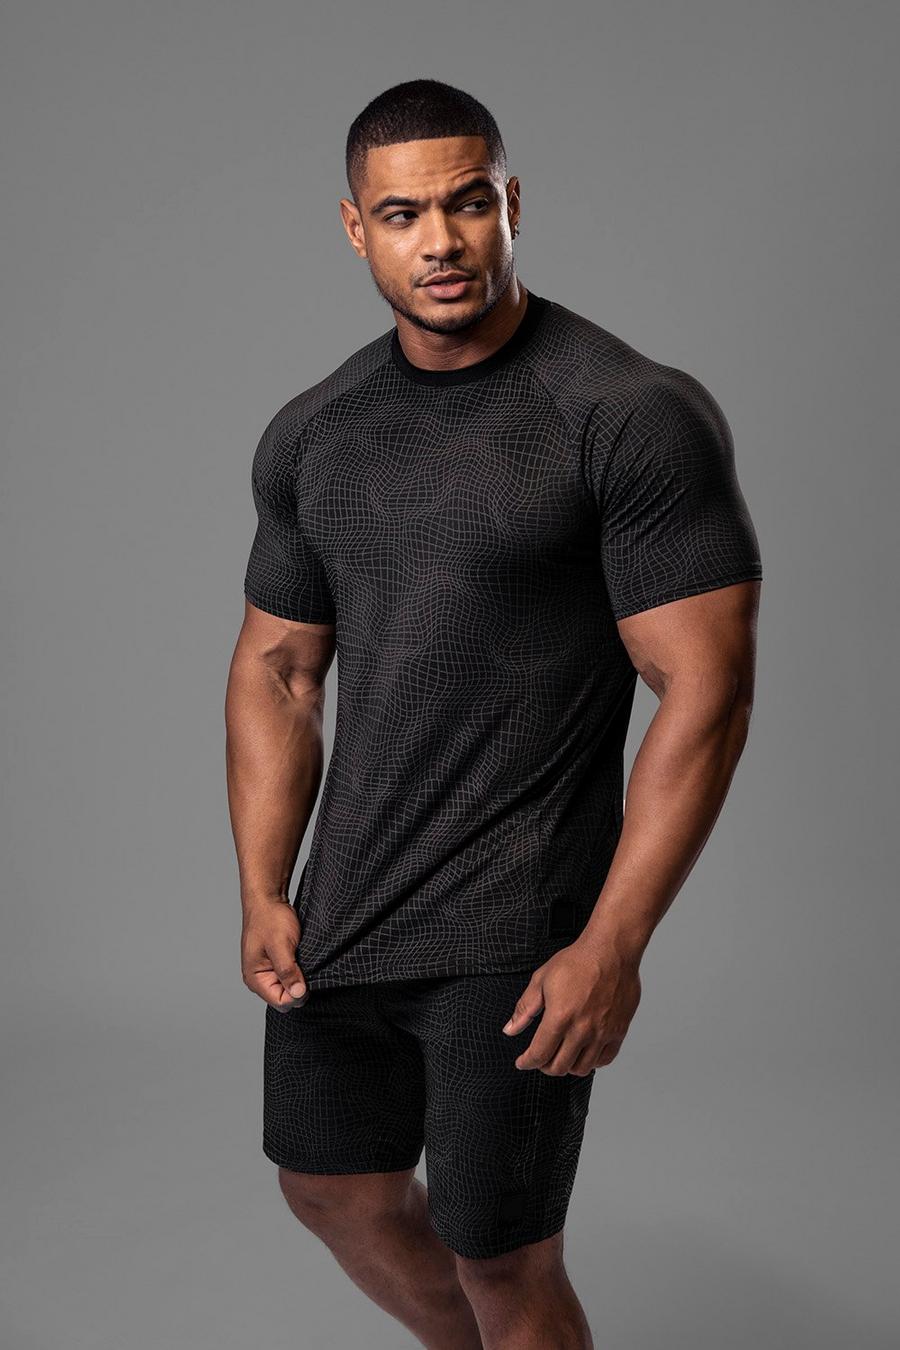 T-shirt Man Active Gym riflettente con stampa a griglia, Black negro